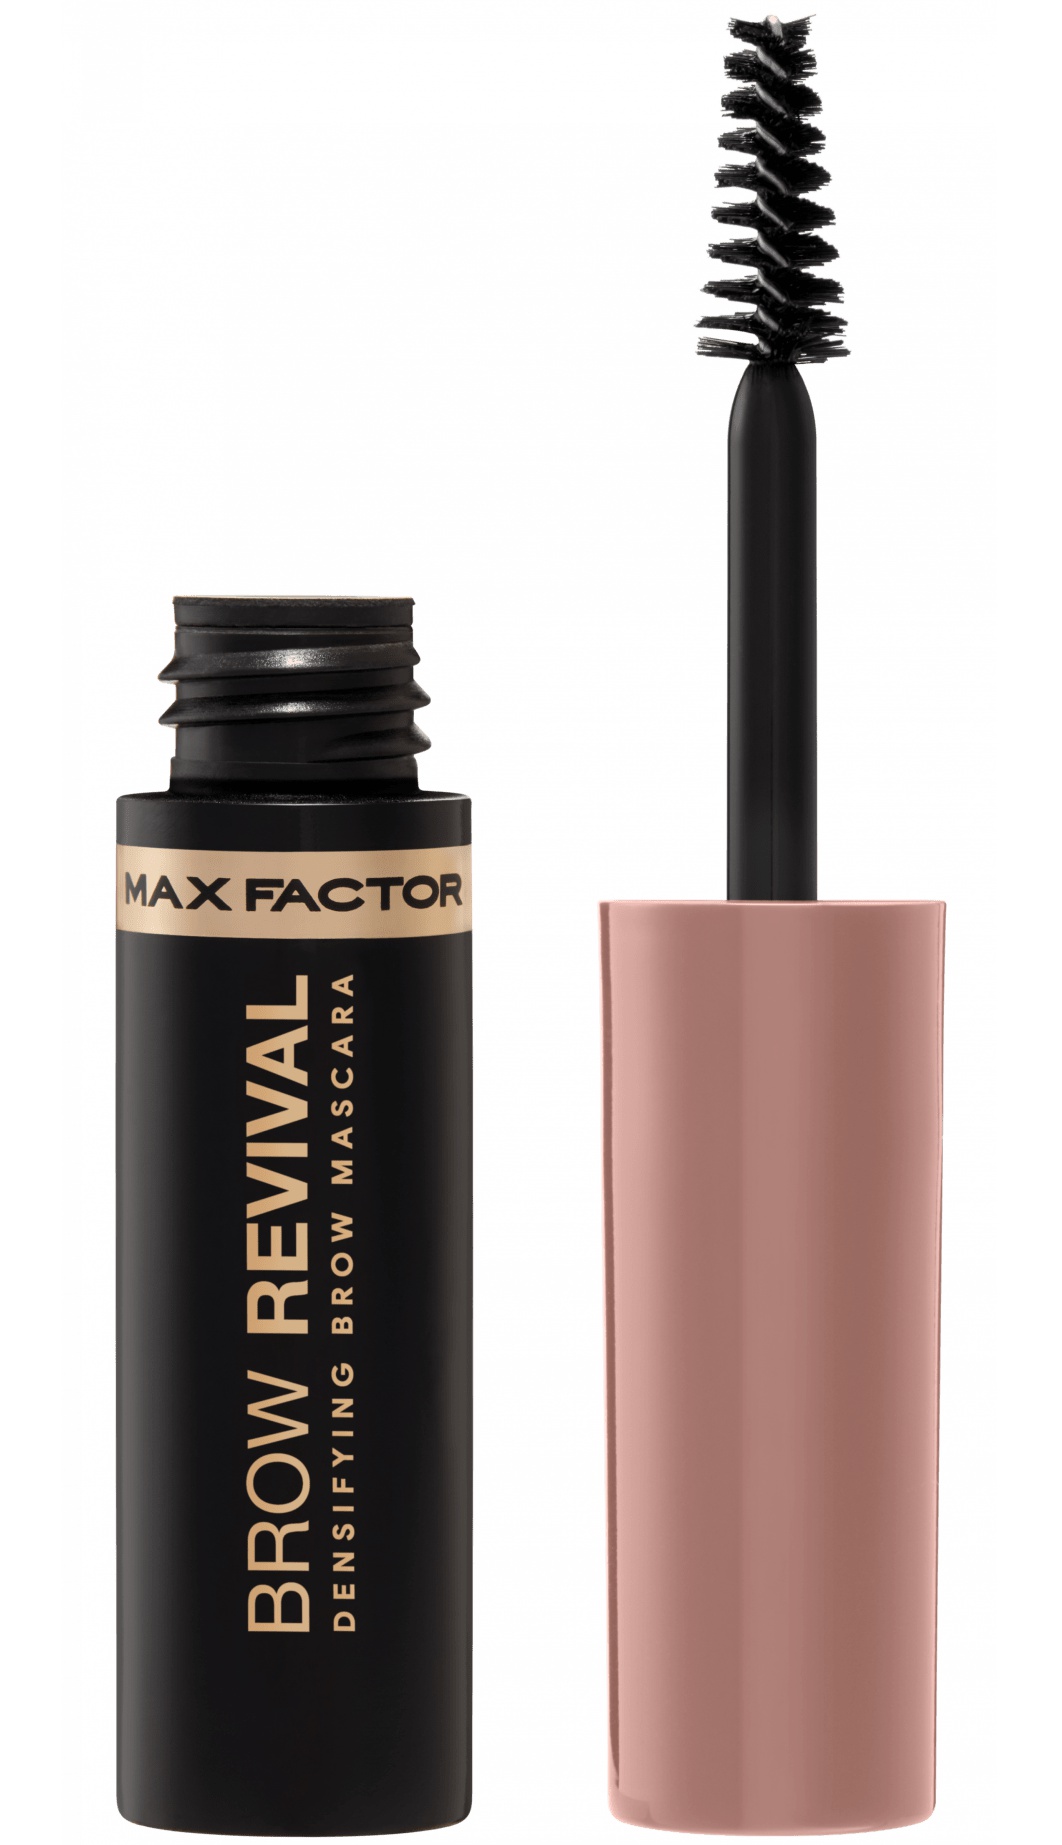 Max Factor Brow Revival Densifying Brow Mascara